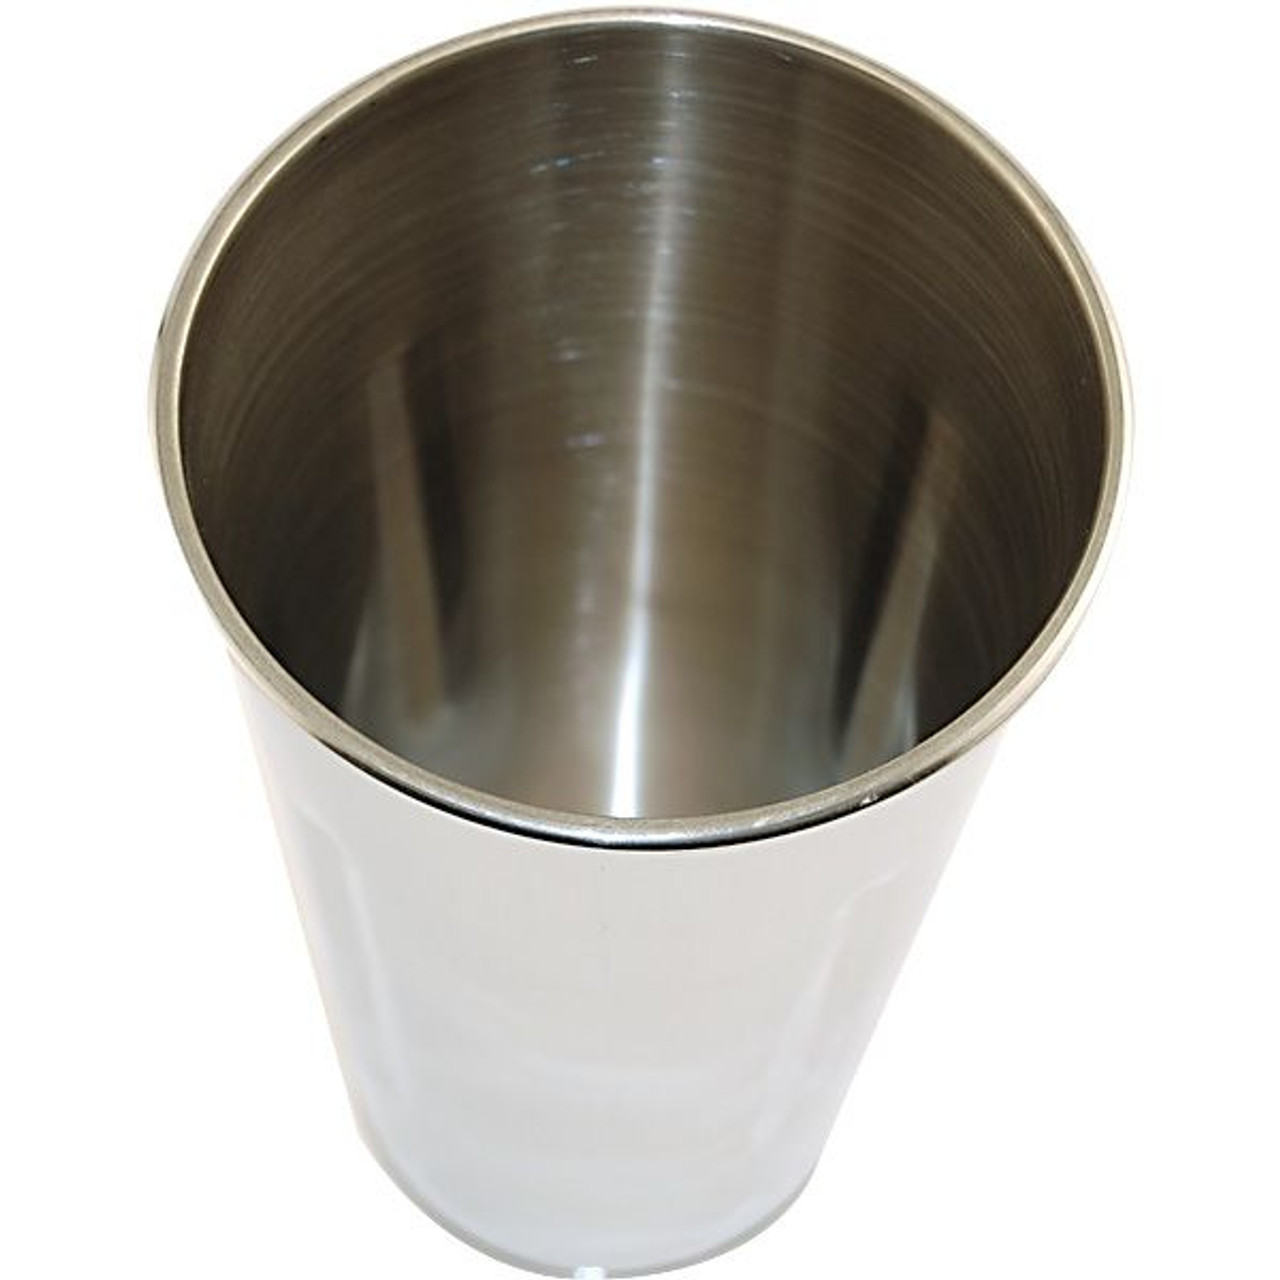 Metal Magery Stainless Steel Milkshake Cups Immersion Hand Blender Malt Cup 30 oz Set of 2